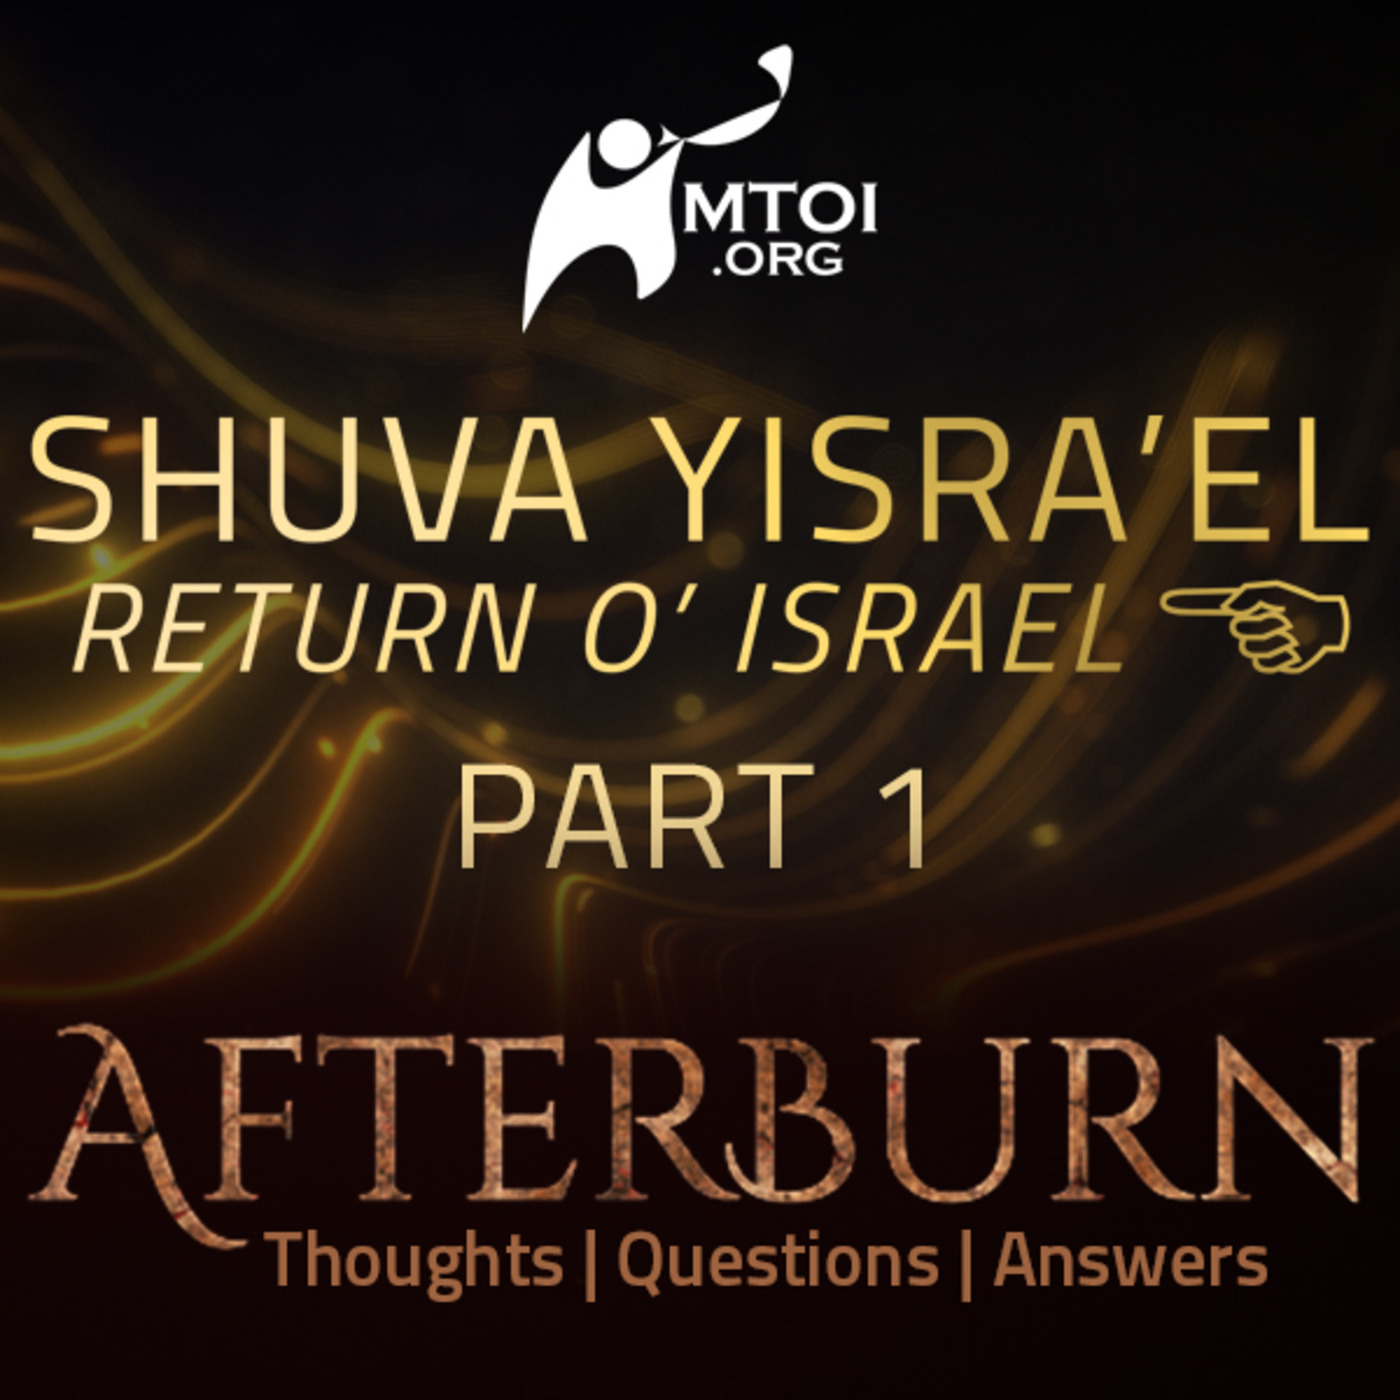 Episode 674: Afterburn | Thoughts, Q&A on Shuva Yisra’el (Return O’ Israel) | Part 1